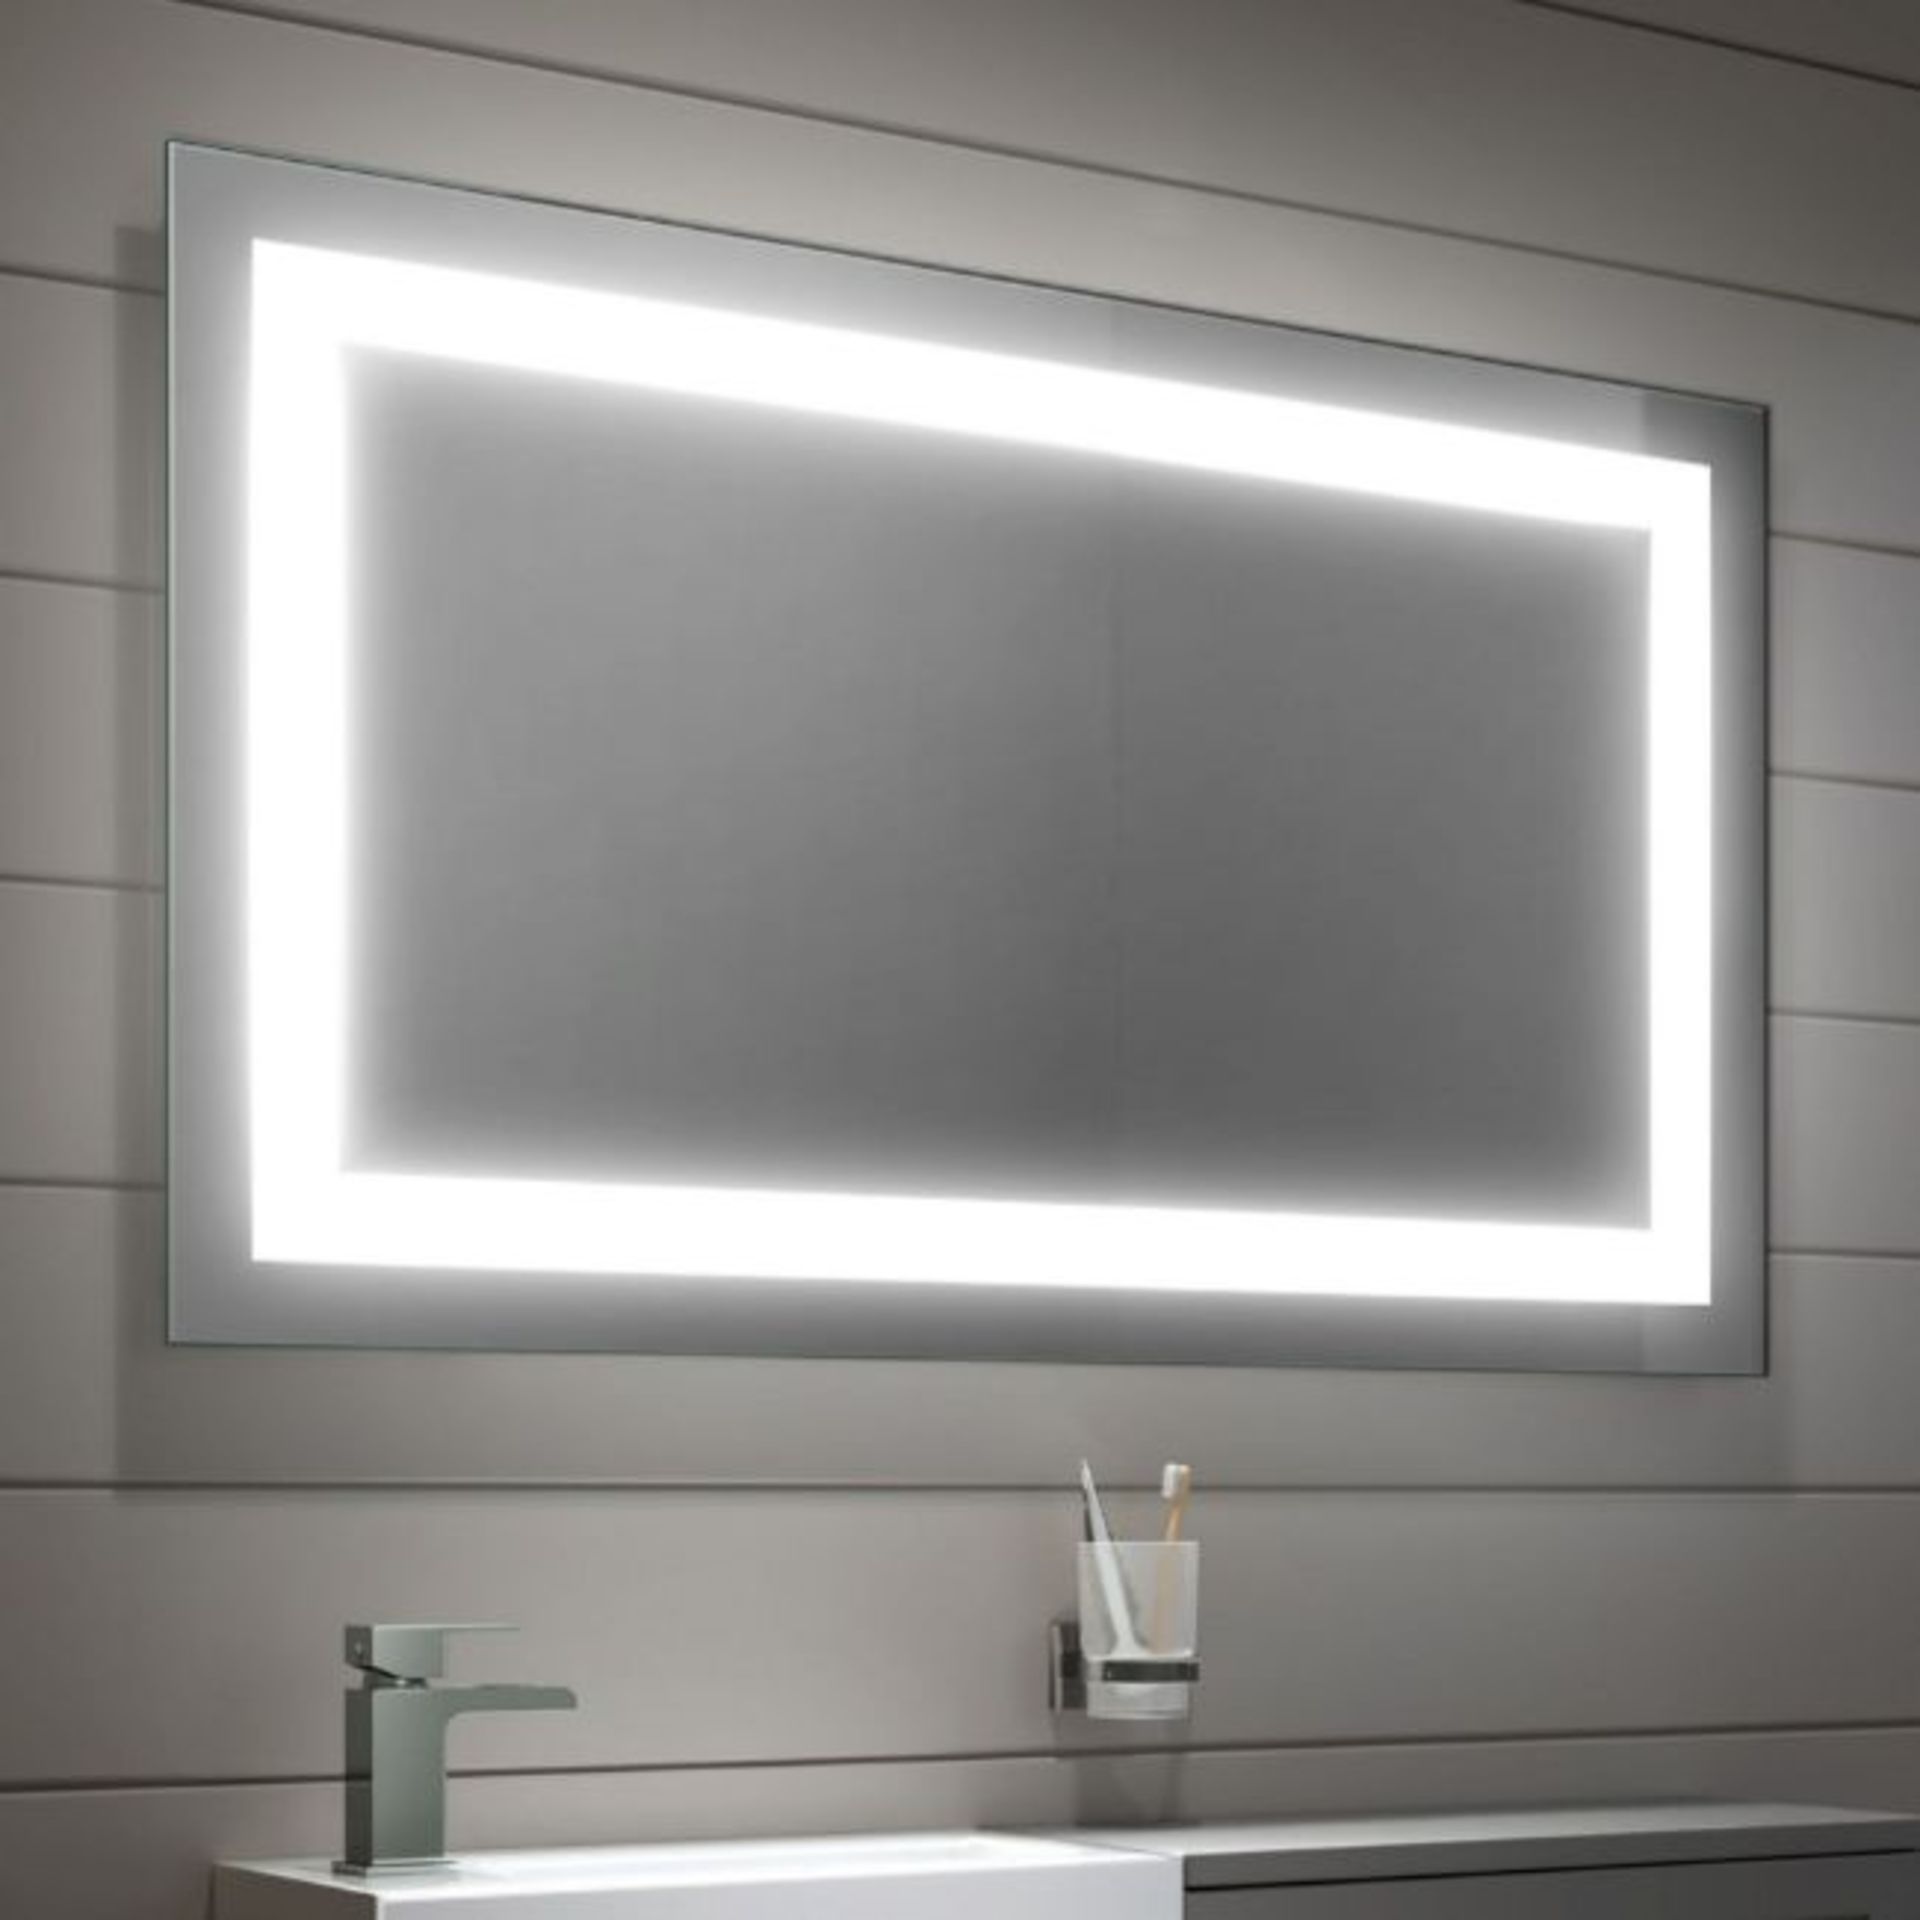 New 600x1000 Nova Illuminated Led Mirror. RRP £499.99.Ml7006.We Love This Mirror As It Provid...